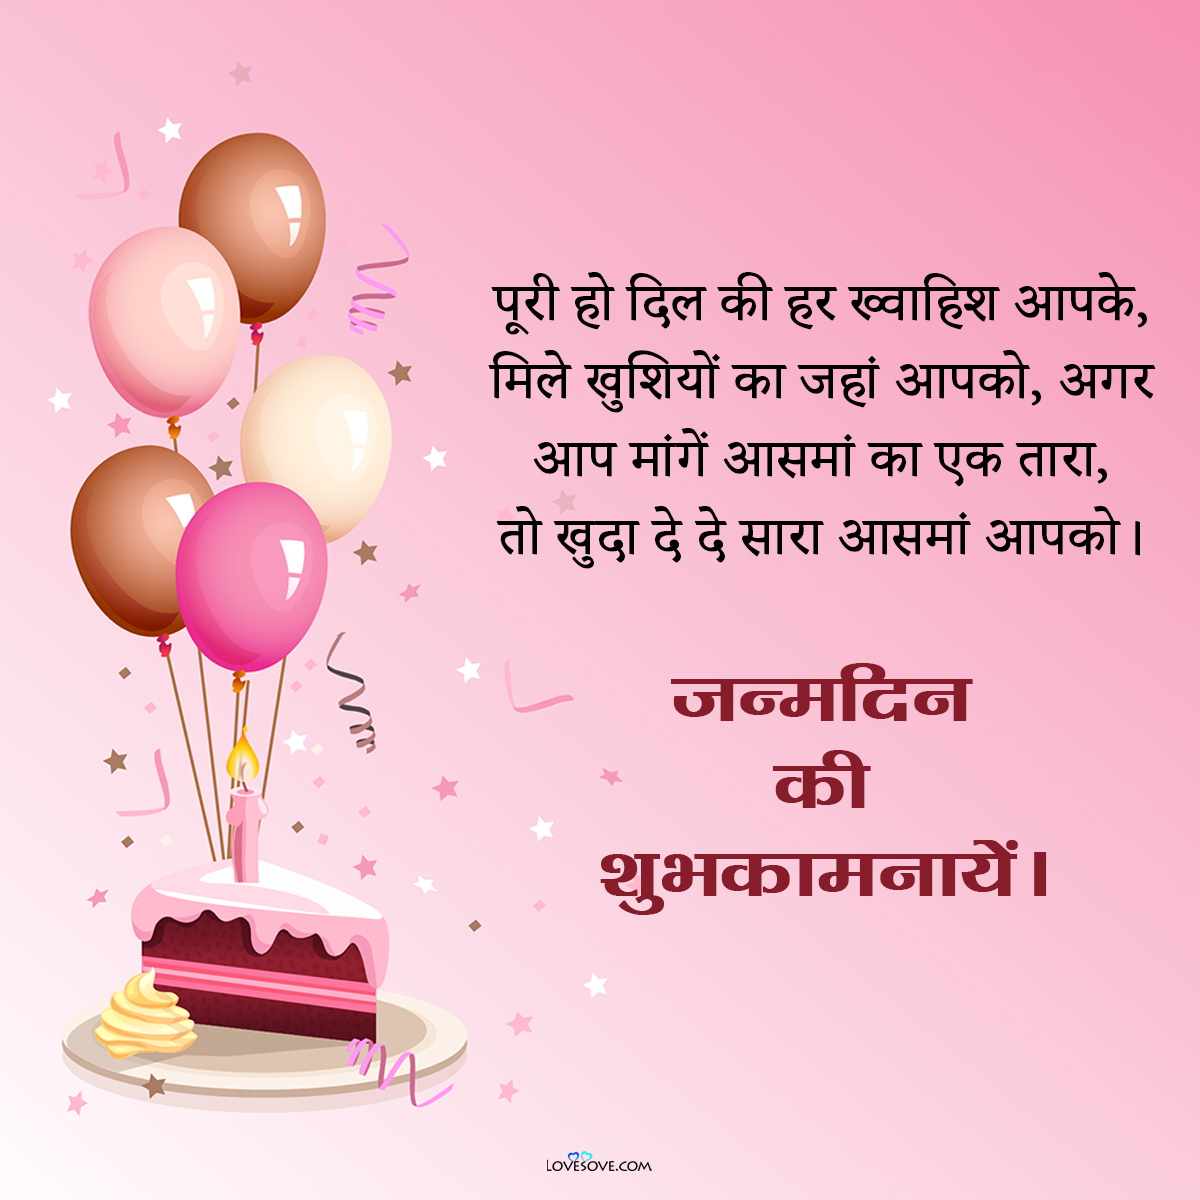 happy birthday wishses images hindi lovesove 2, birthday wishes